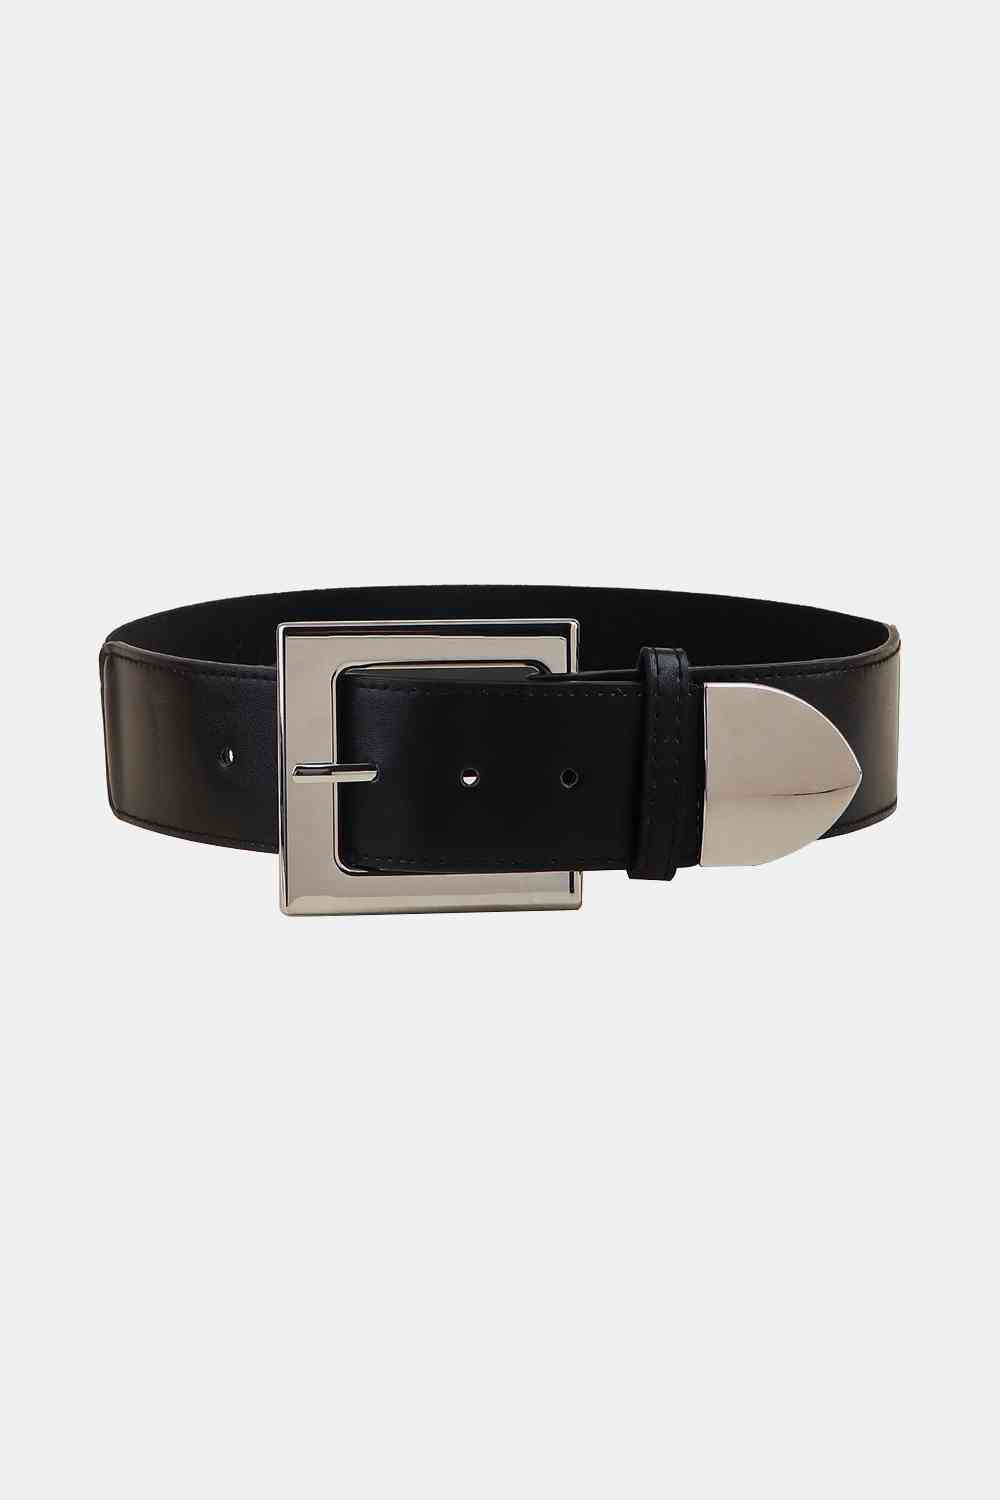 Zinc Alloy Buckle PU Leather Belt - Belt - FITGGINS